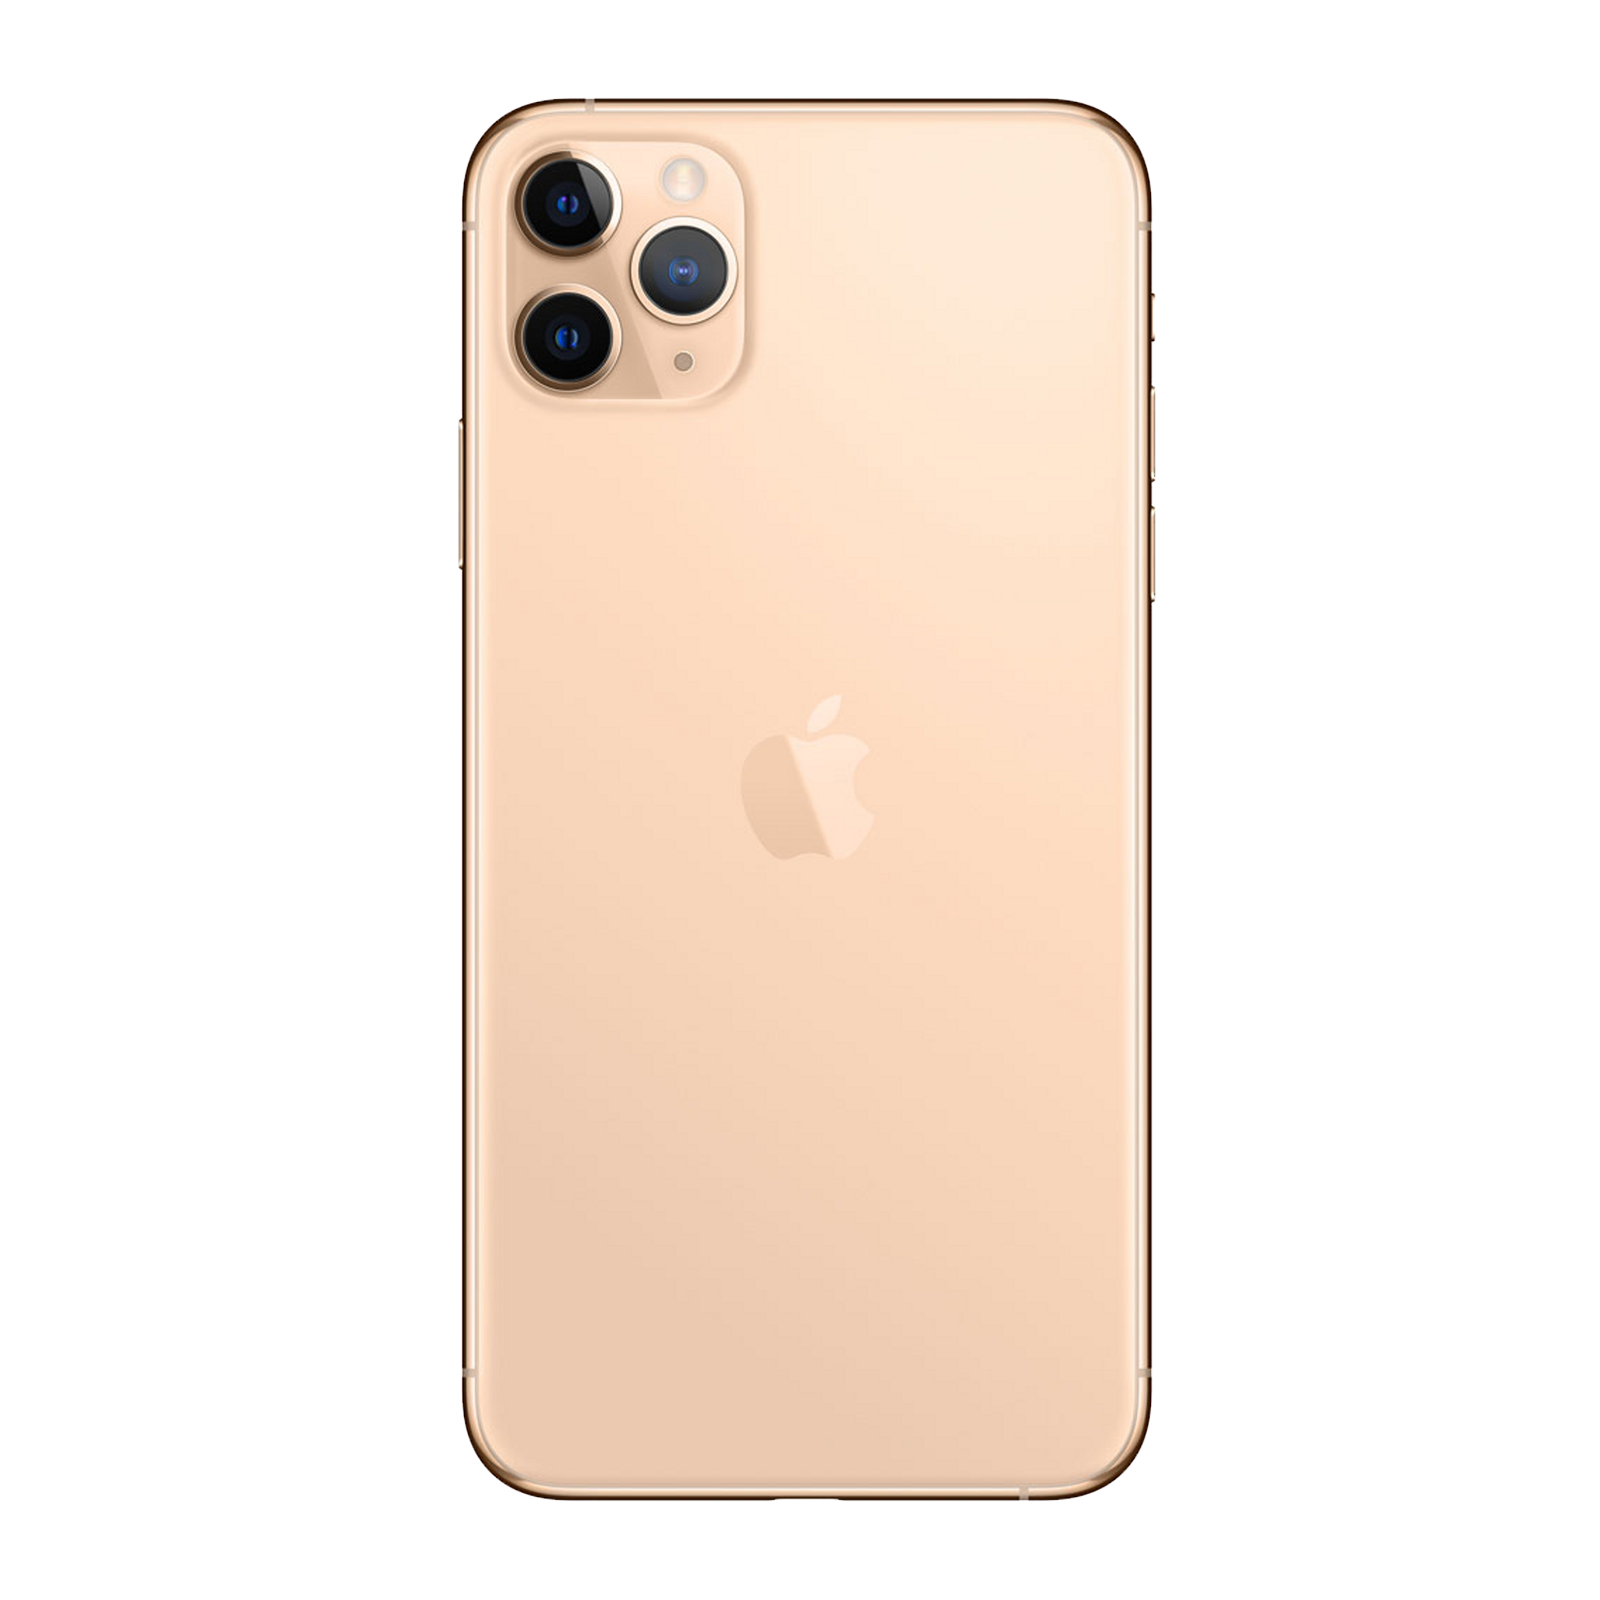 Apple iPhone 11 Pro 256GB Gold Fair - Verizon